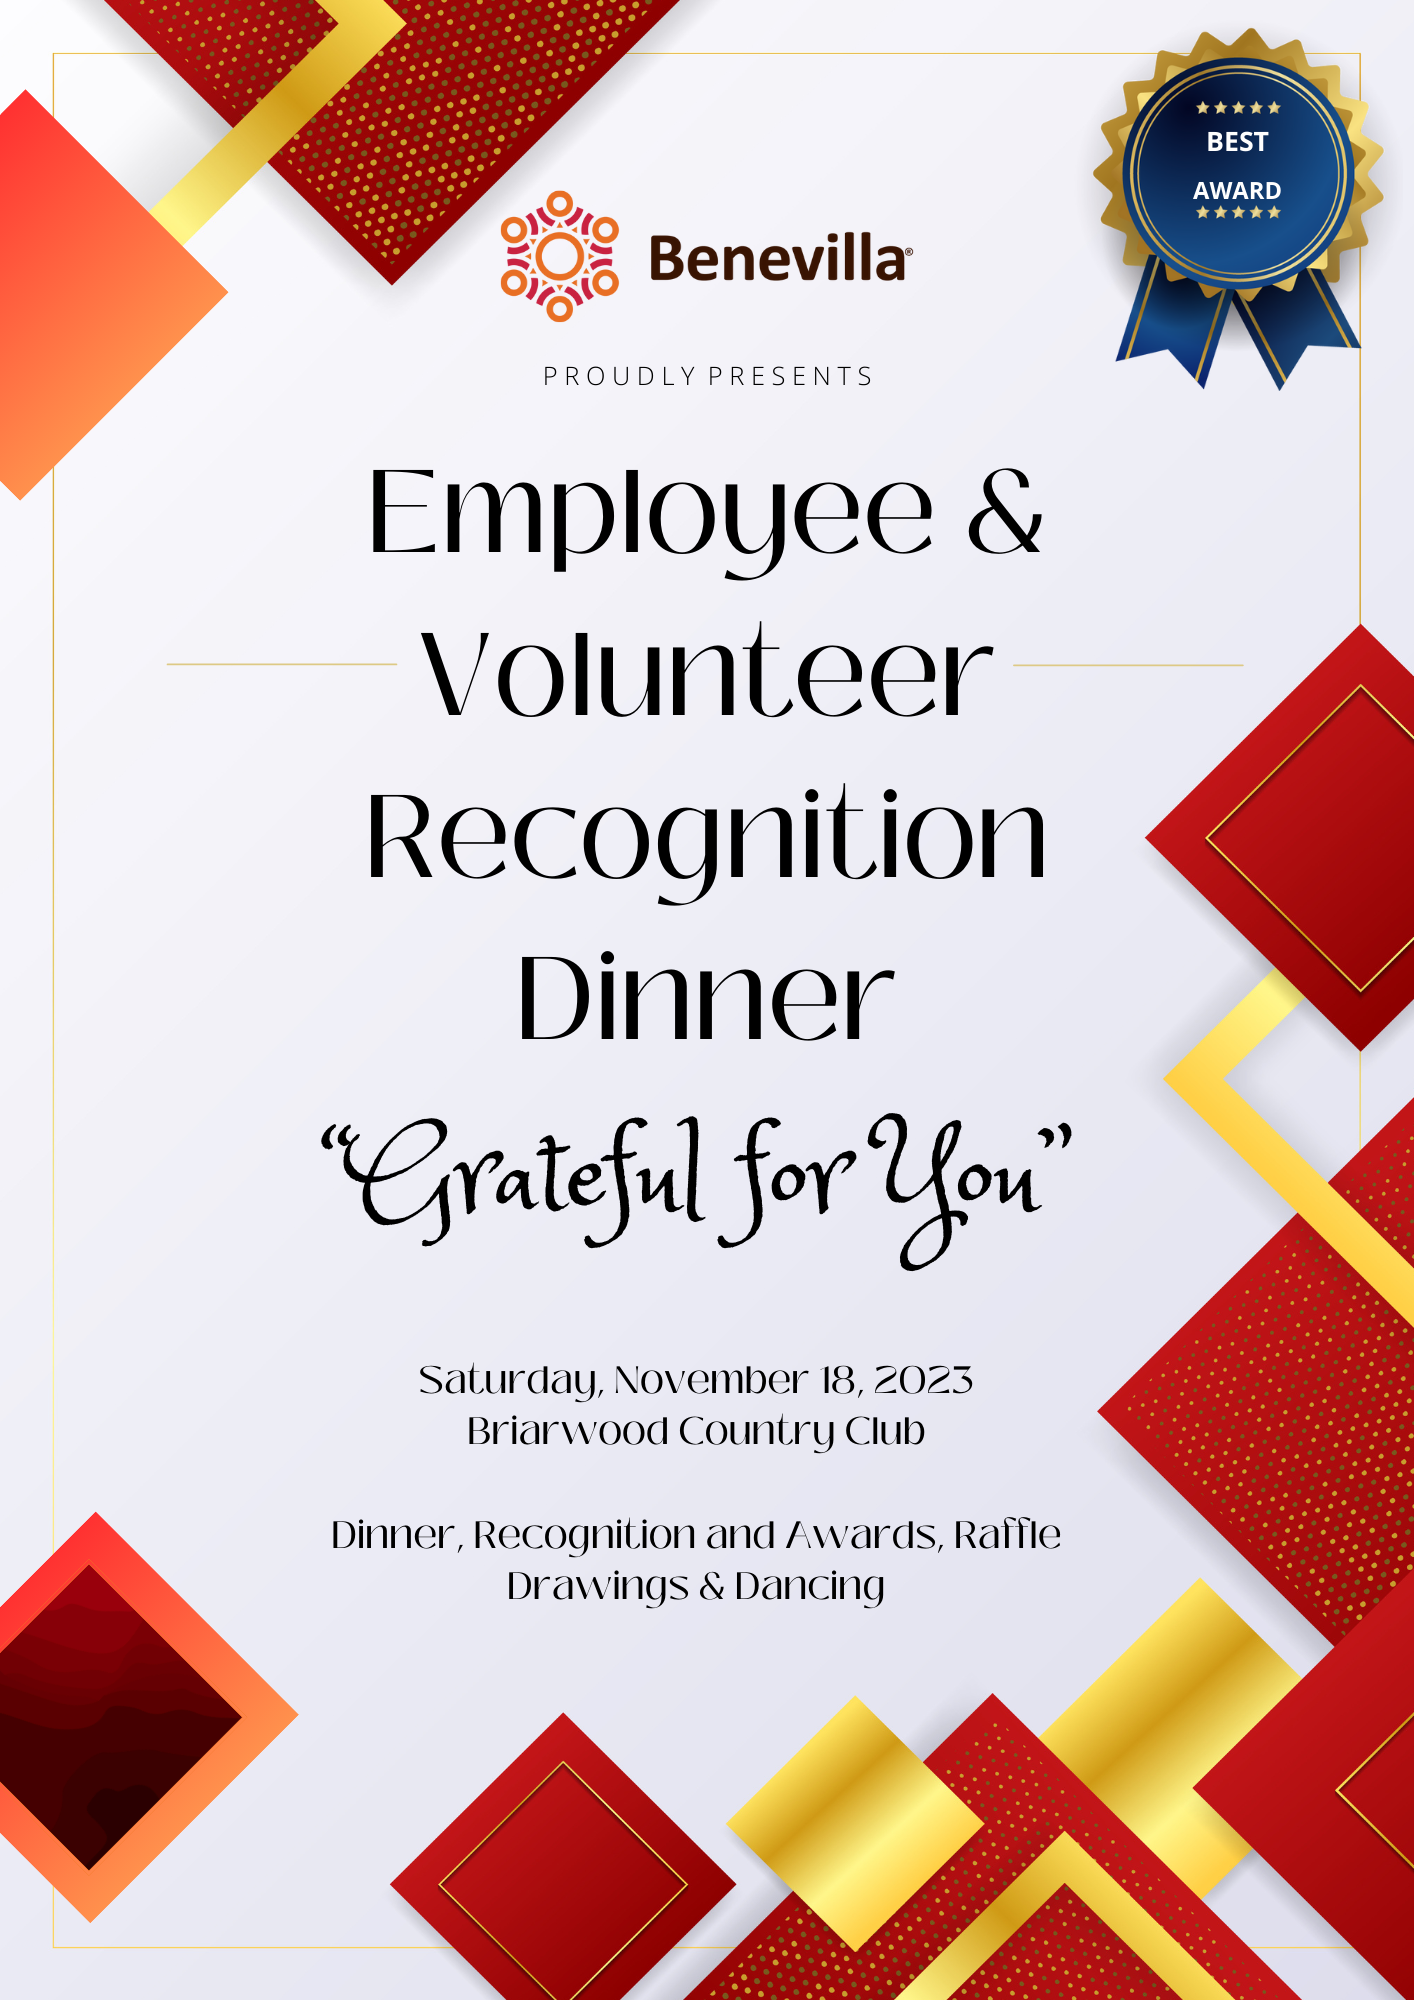 Benevilla Employee & Volunteer Recognition Dinner